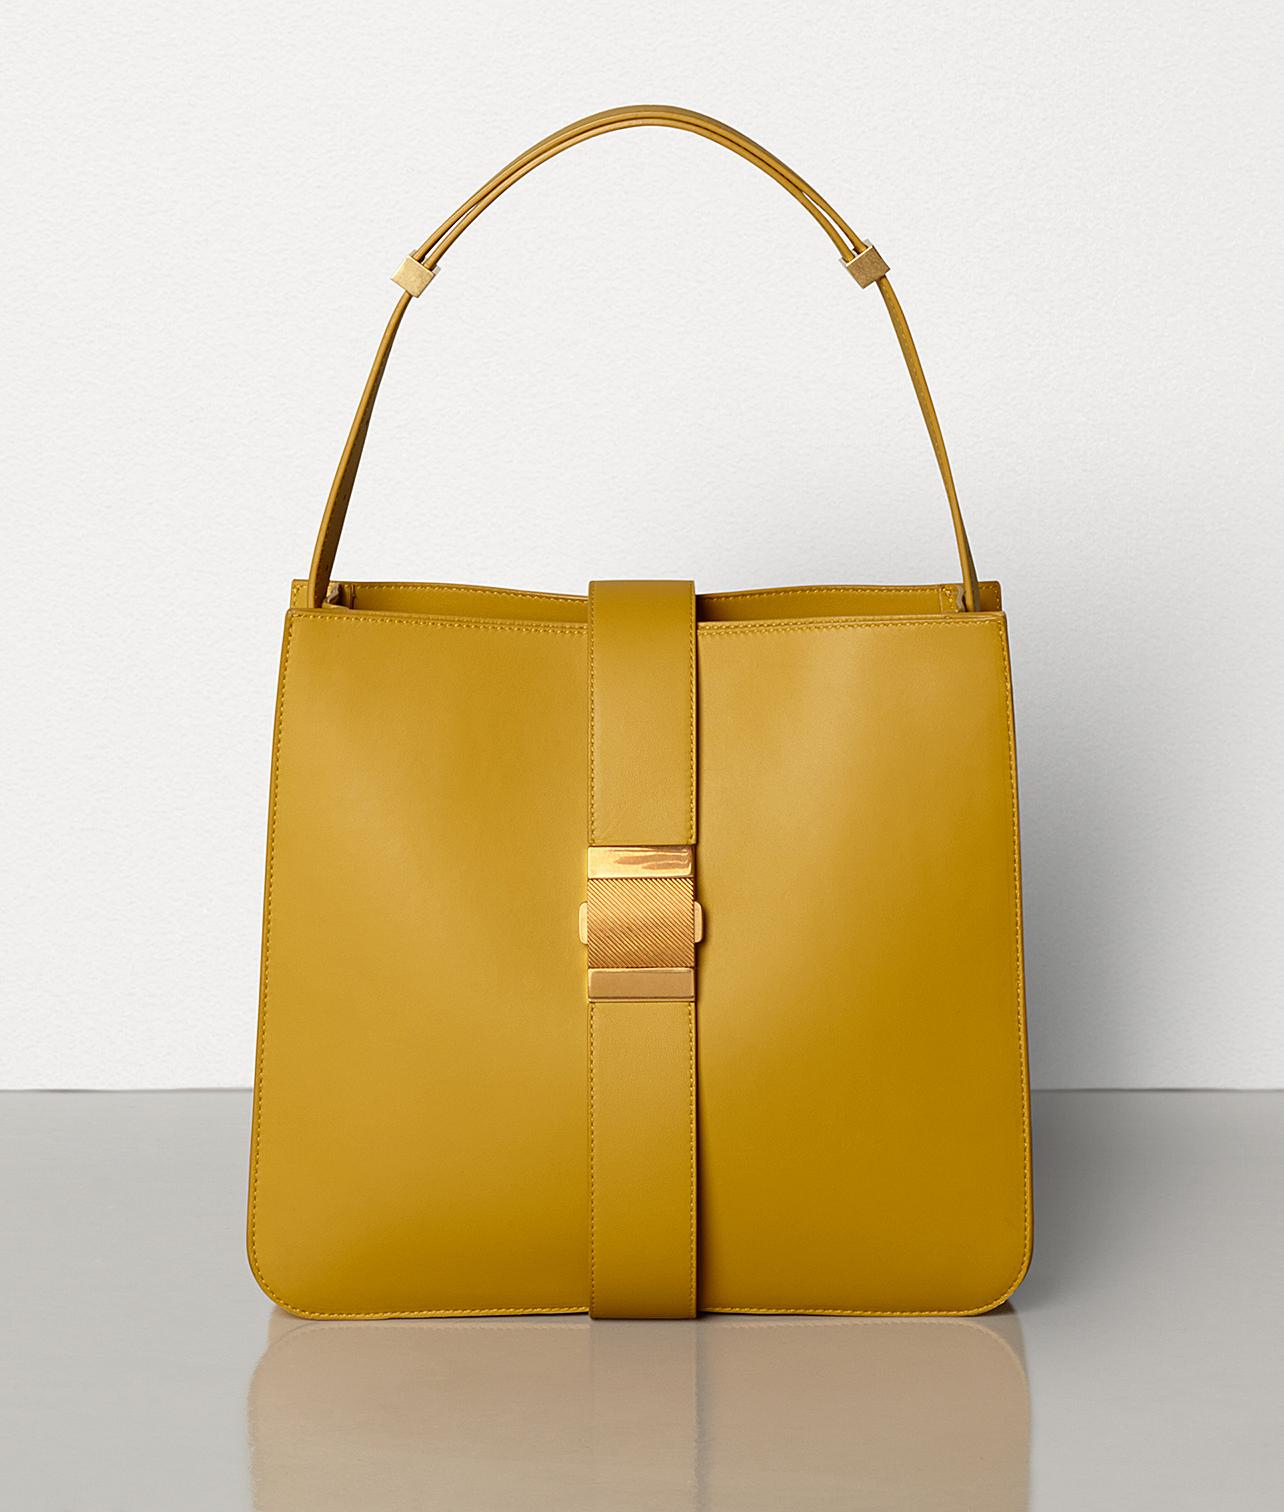 Bottega Veneta The Marie Leather Shoulder Bag in Yellow | Lyst